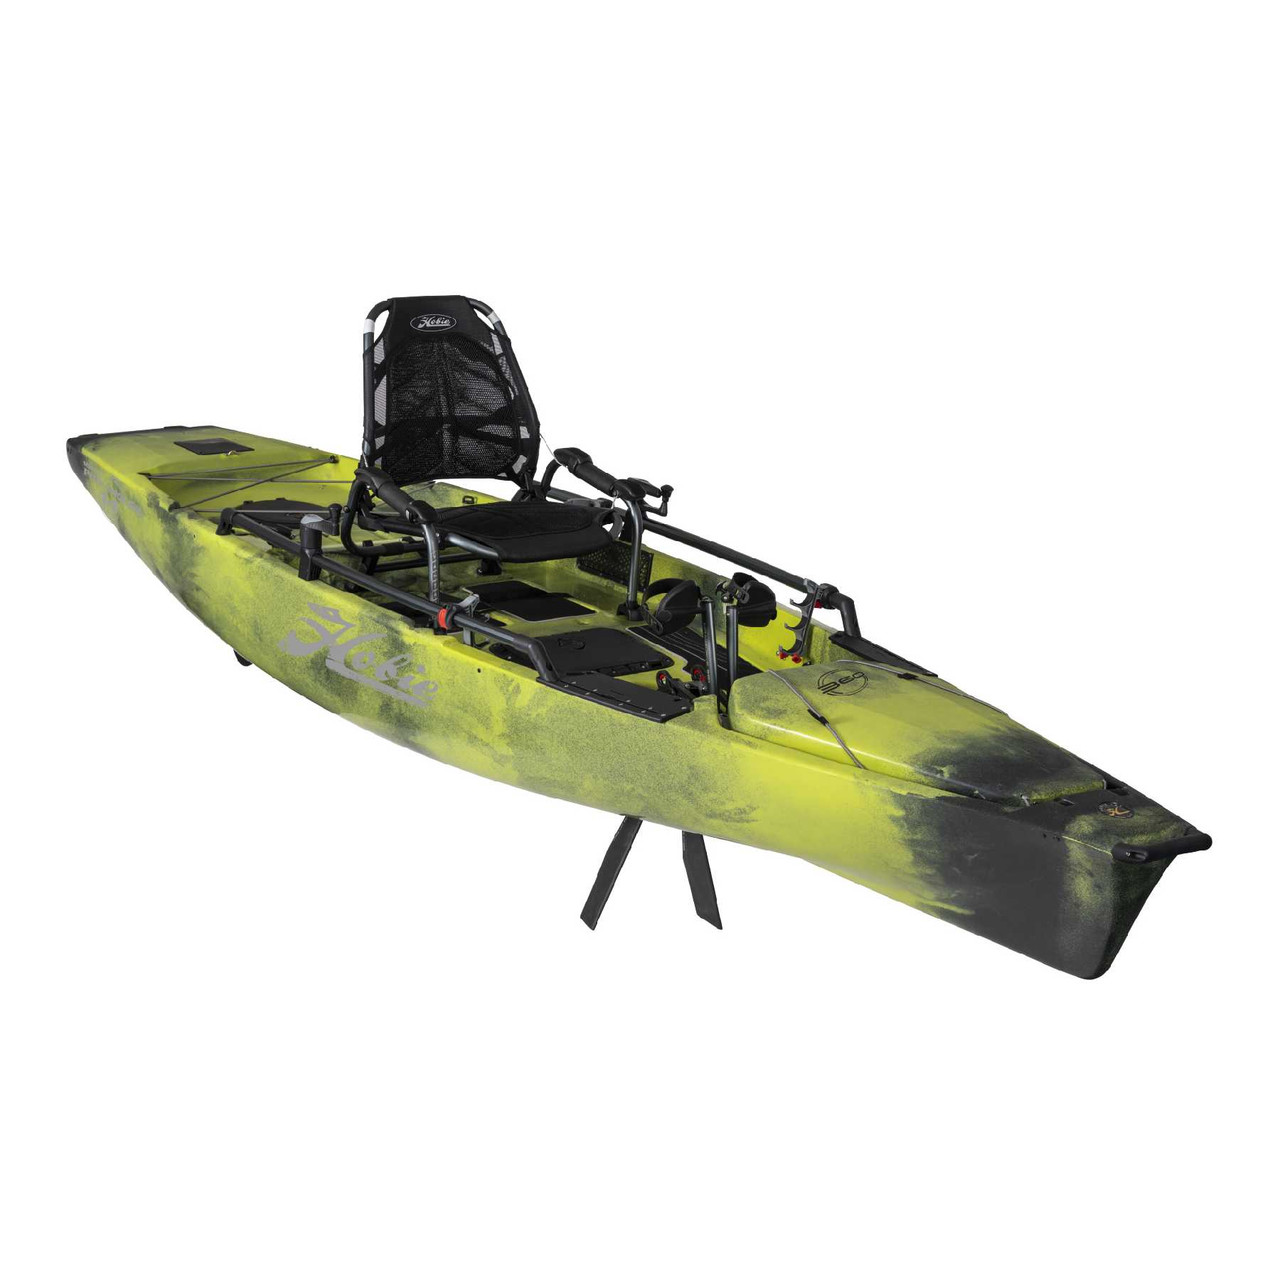 Mirage Pro Angler 12 Kayak with 360 Drive | West Coast Sailing